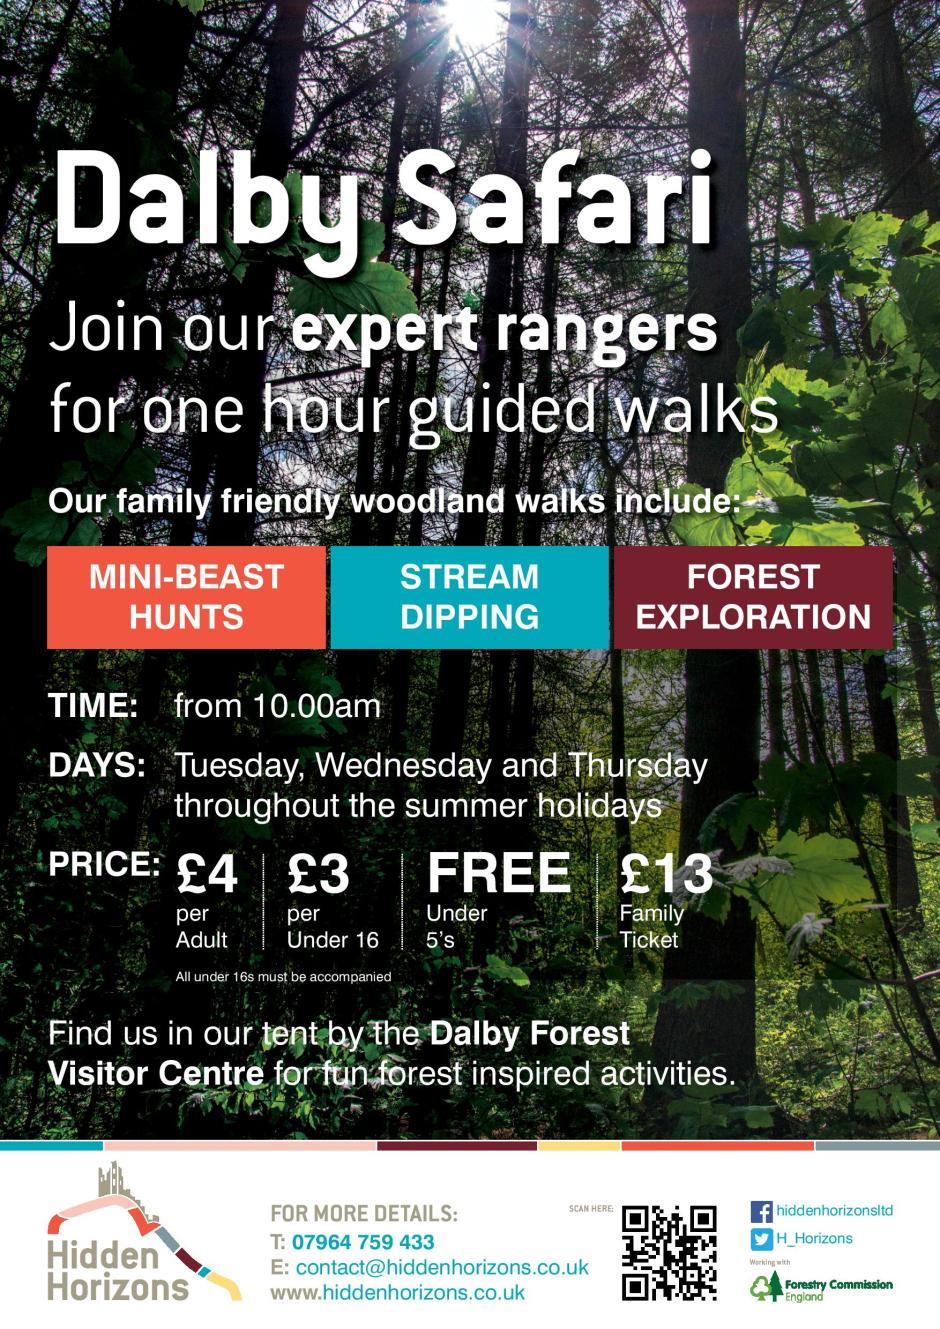 Dalby Safari